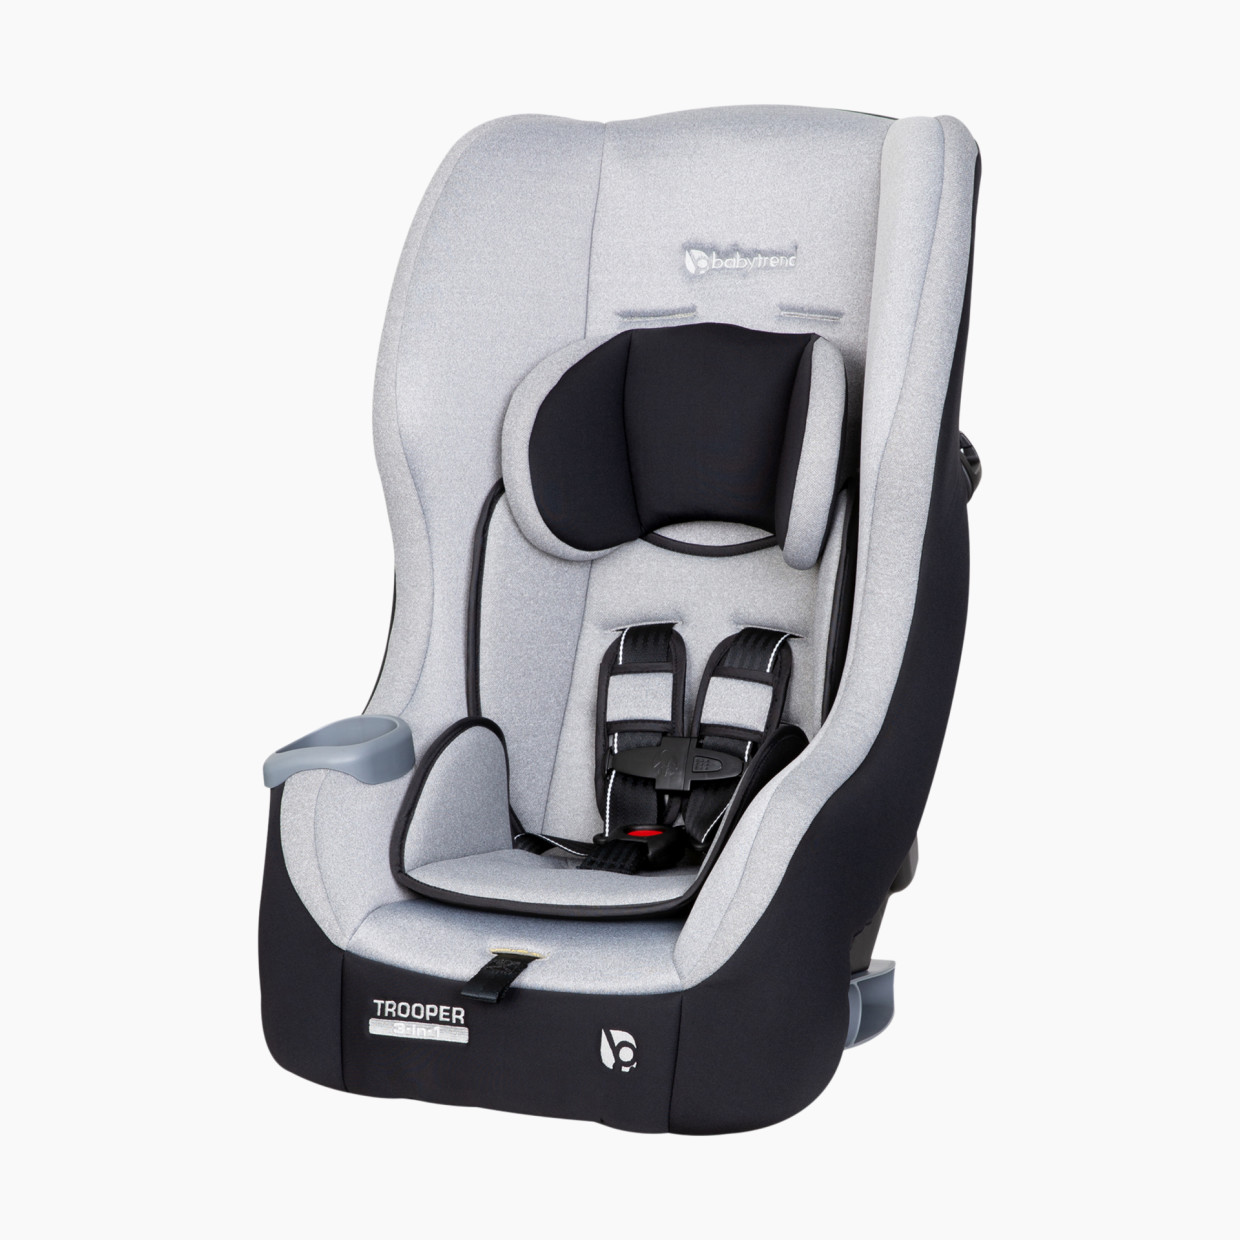 Baby Trend Trooper 3-in-1 Convertible Car Seat - Moondust.